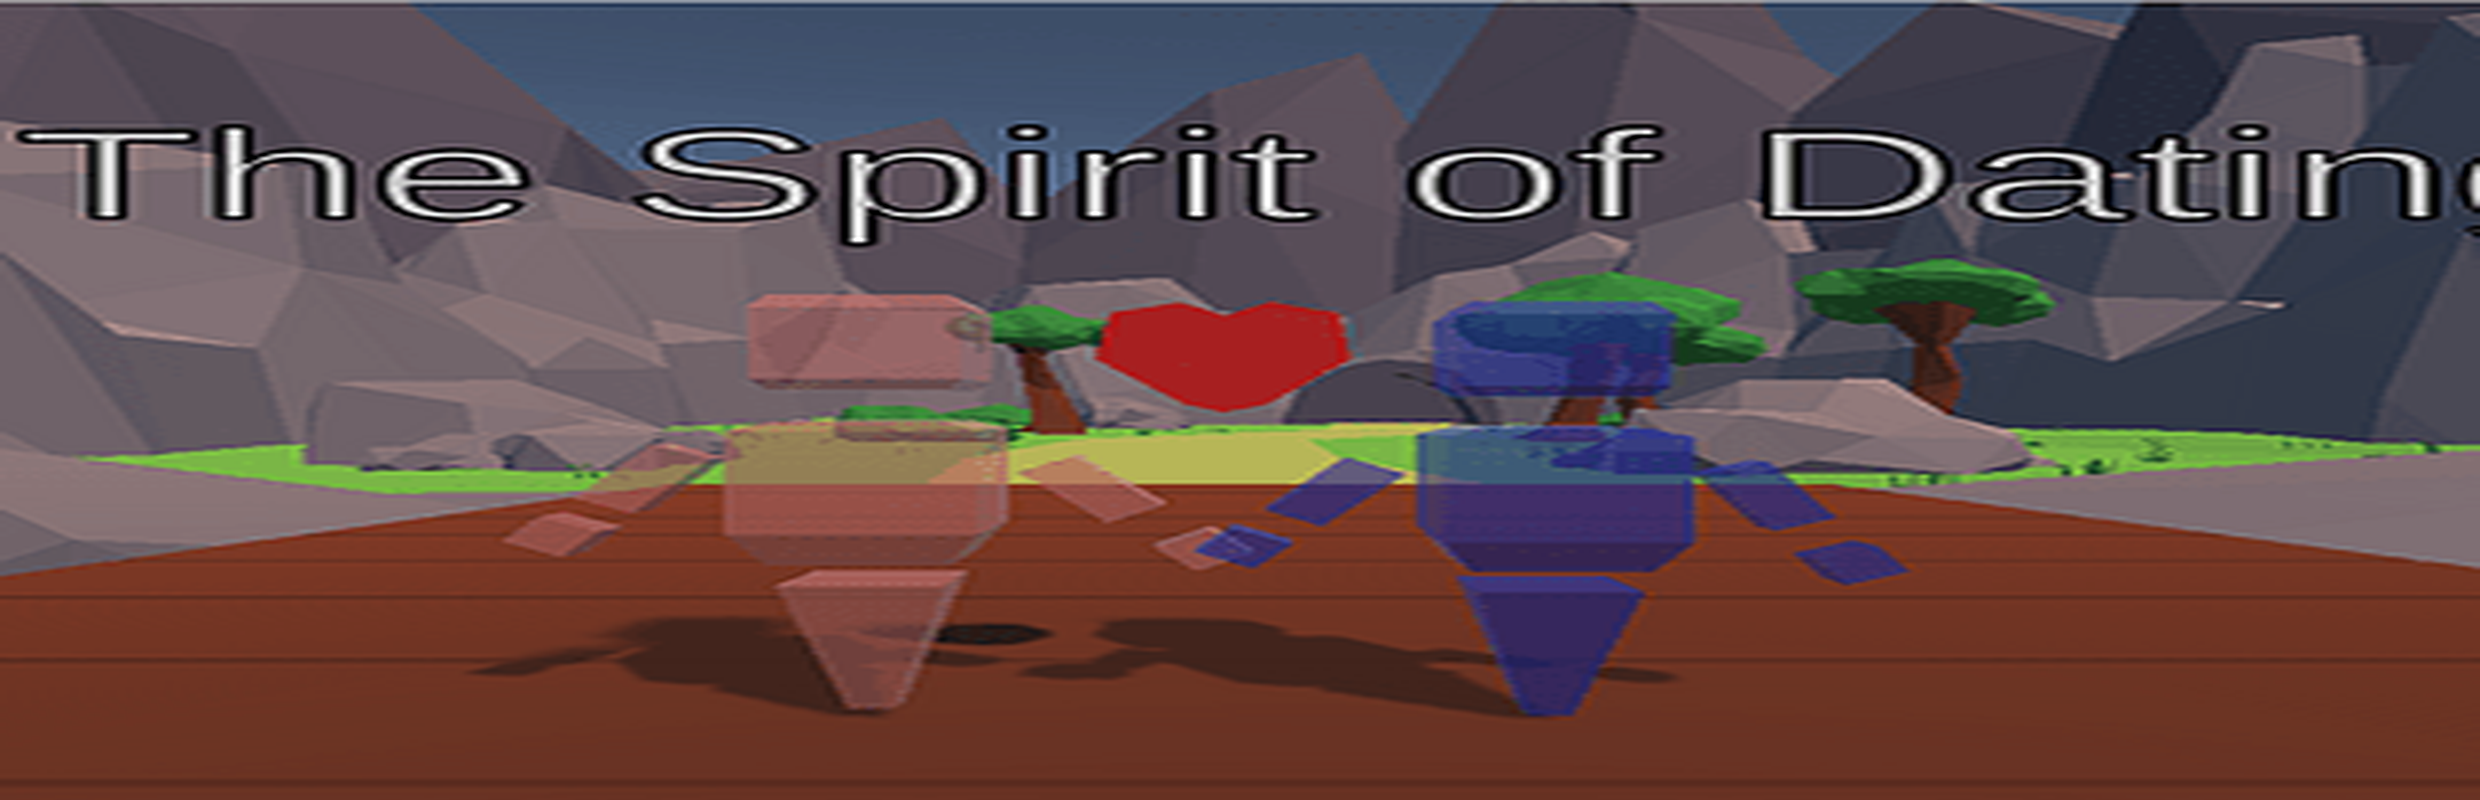 Spirit of Dating (updated game download in description)